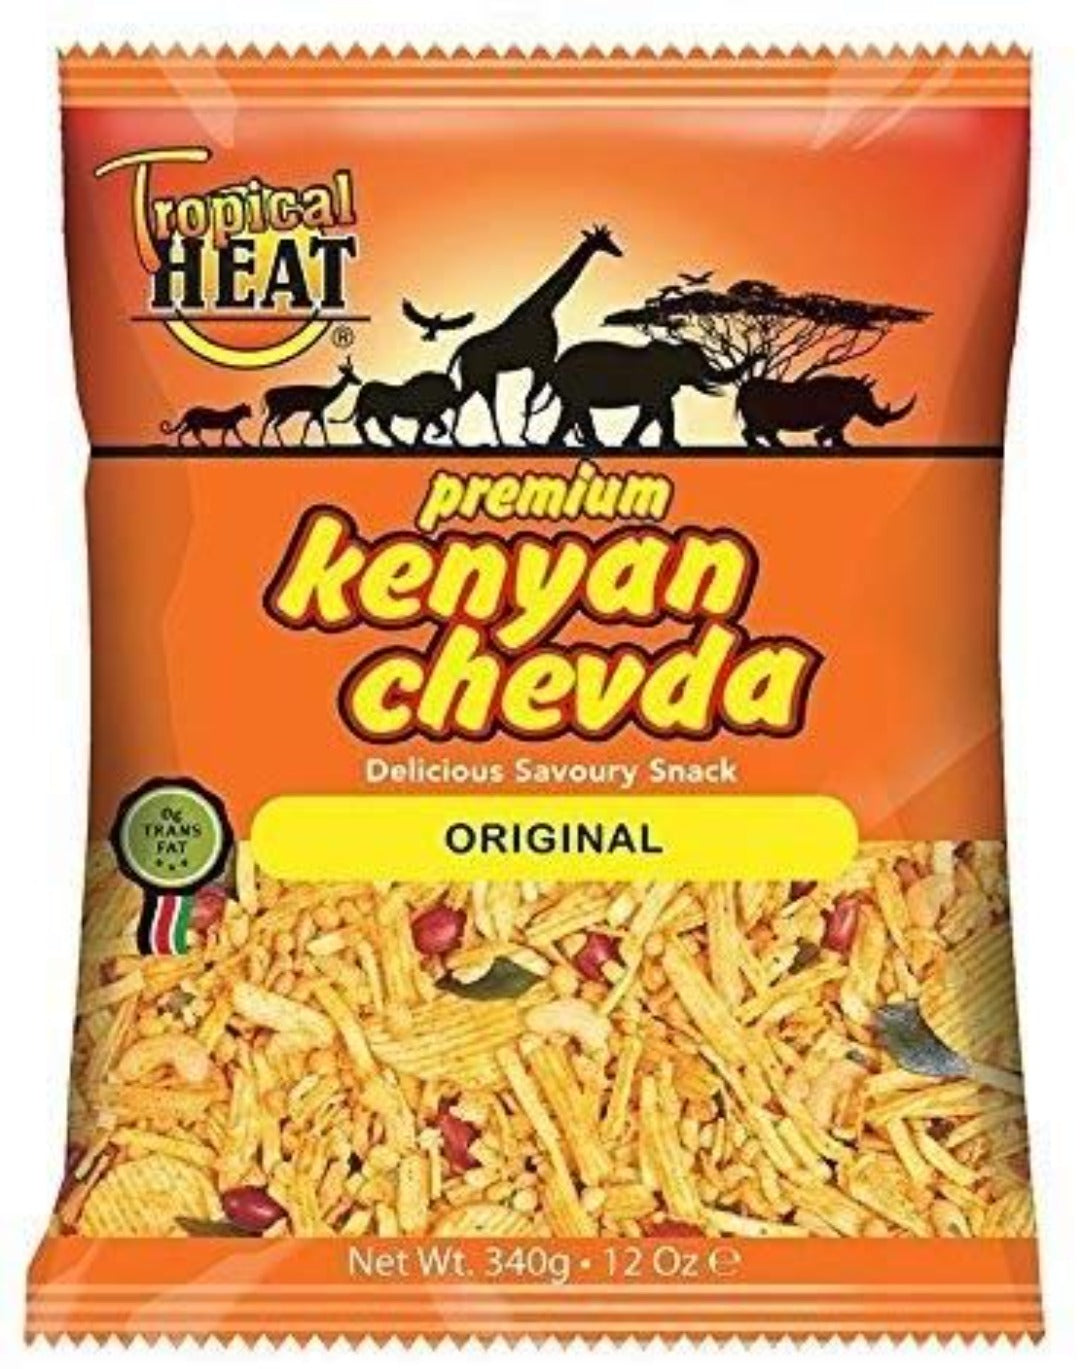 Tropical Heat Kenyan Chevda (Original)